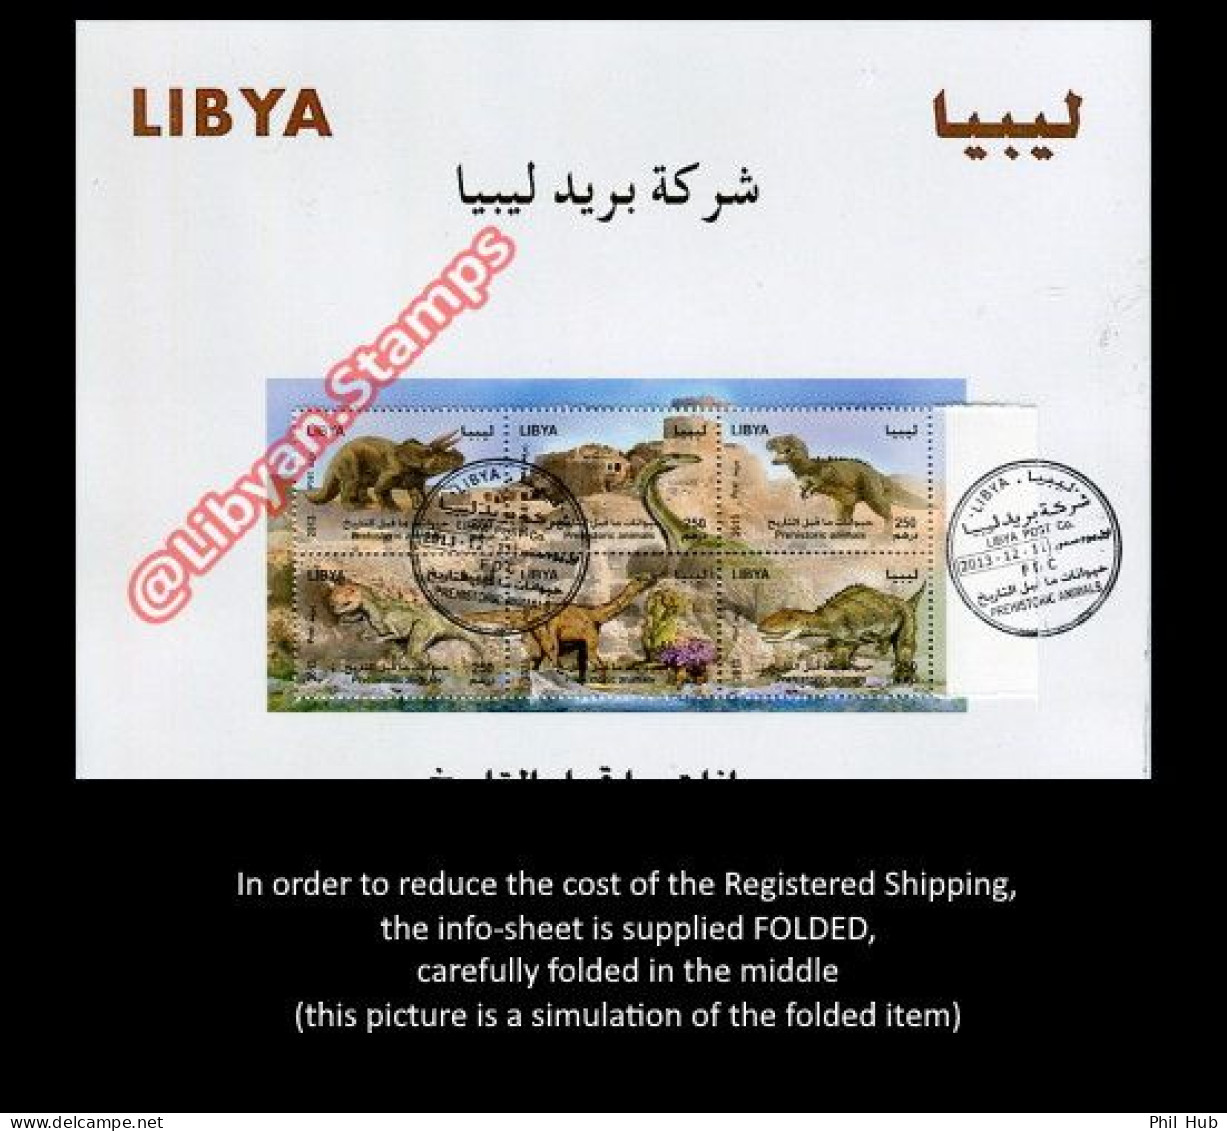 LIBYA 2013 Dinosaurs (Libya Post INFO-SHEET With Stamps PMK) SUPPLIED FOLDED - Prehistorics